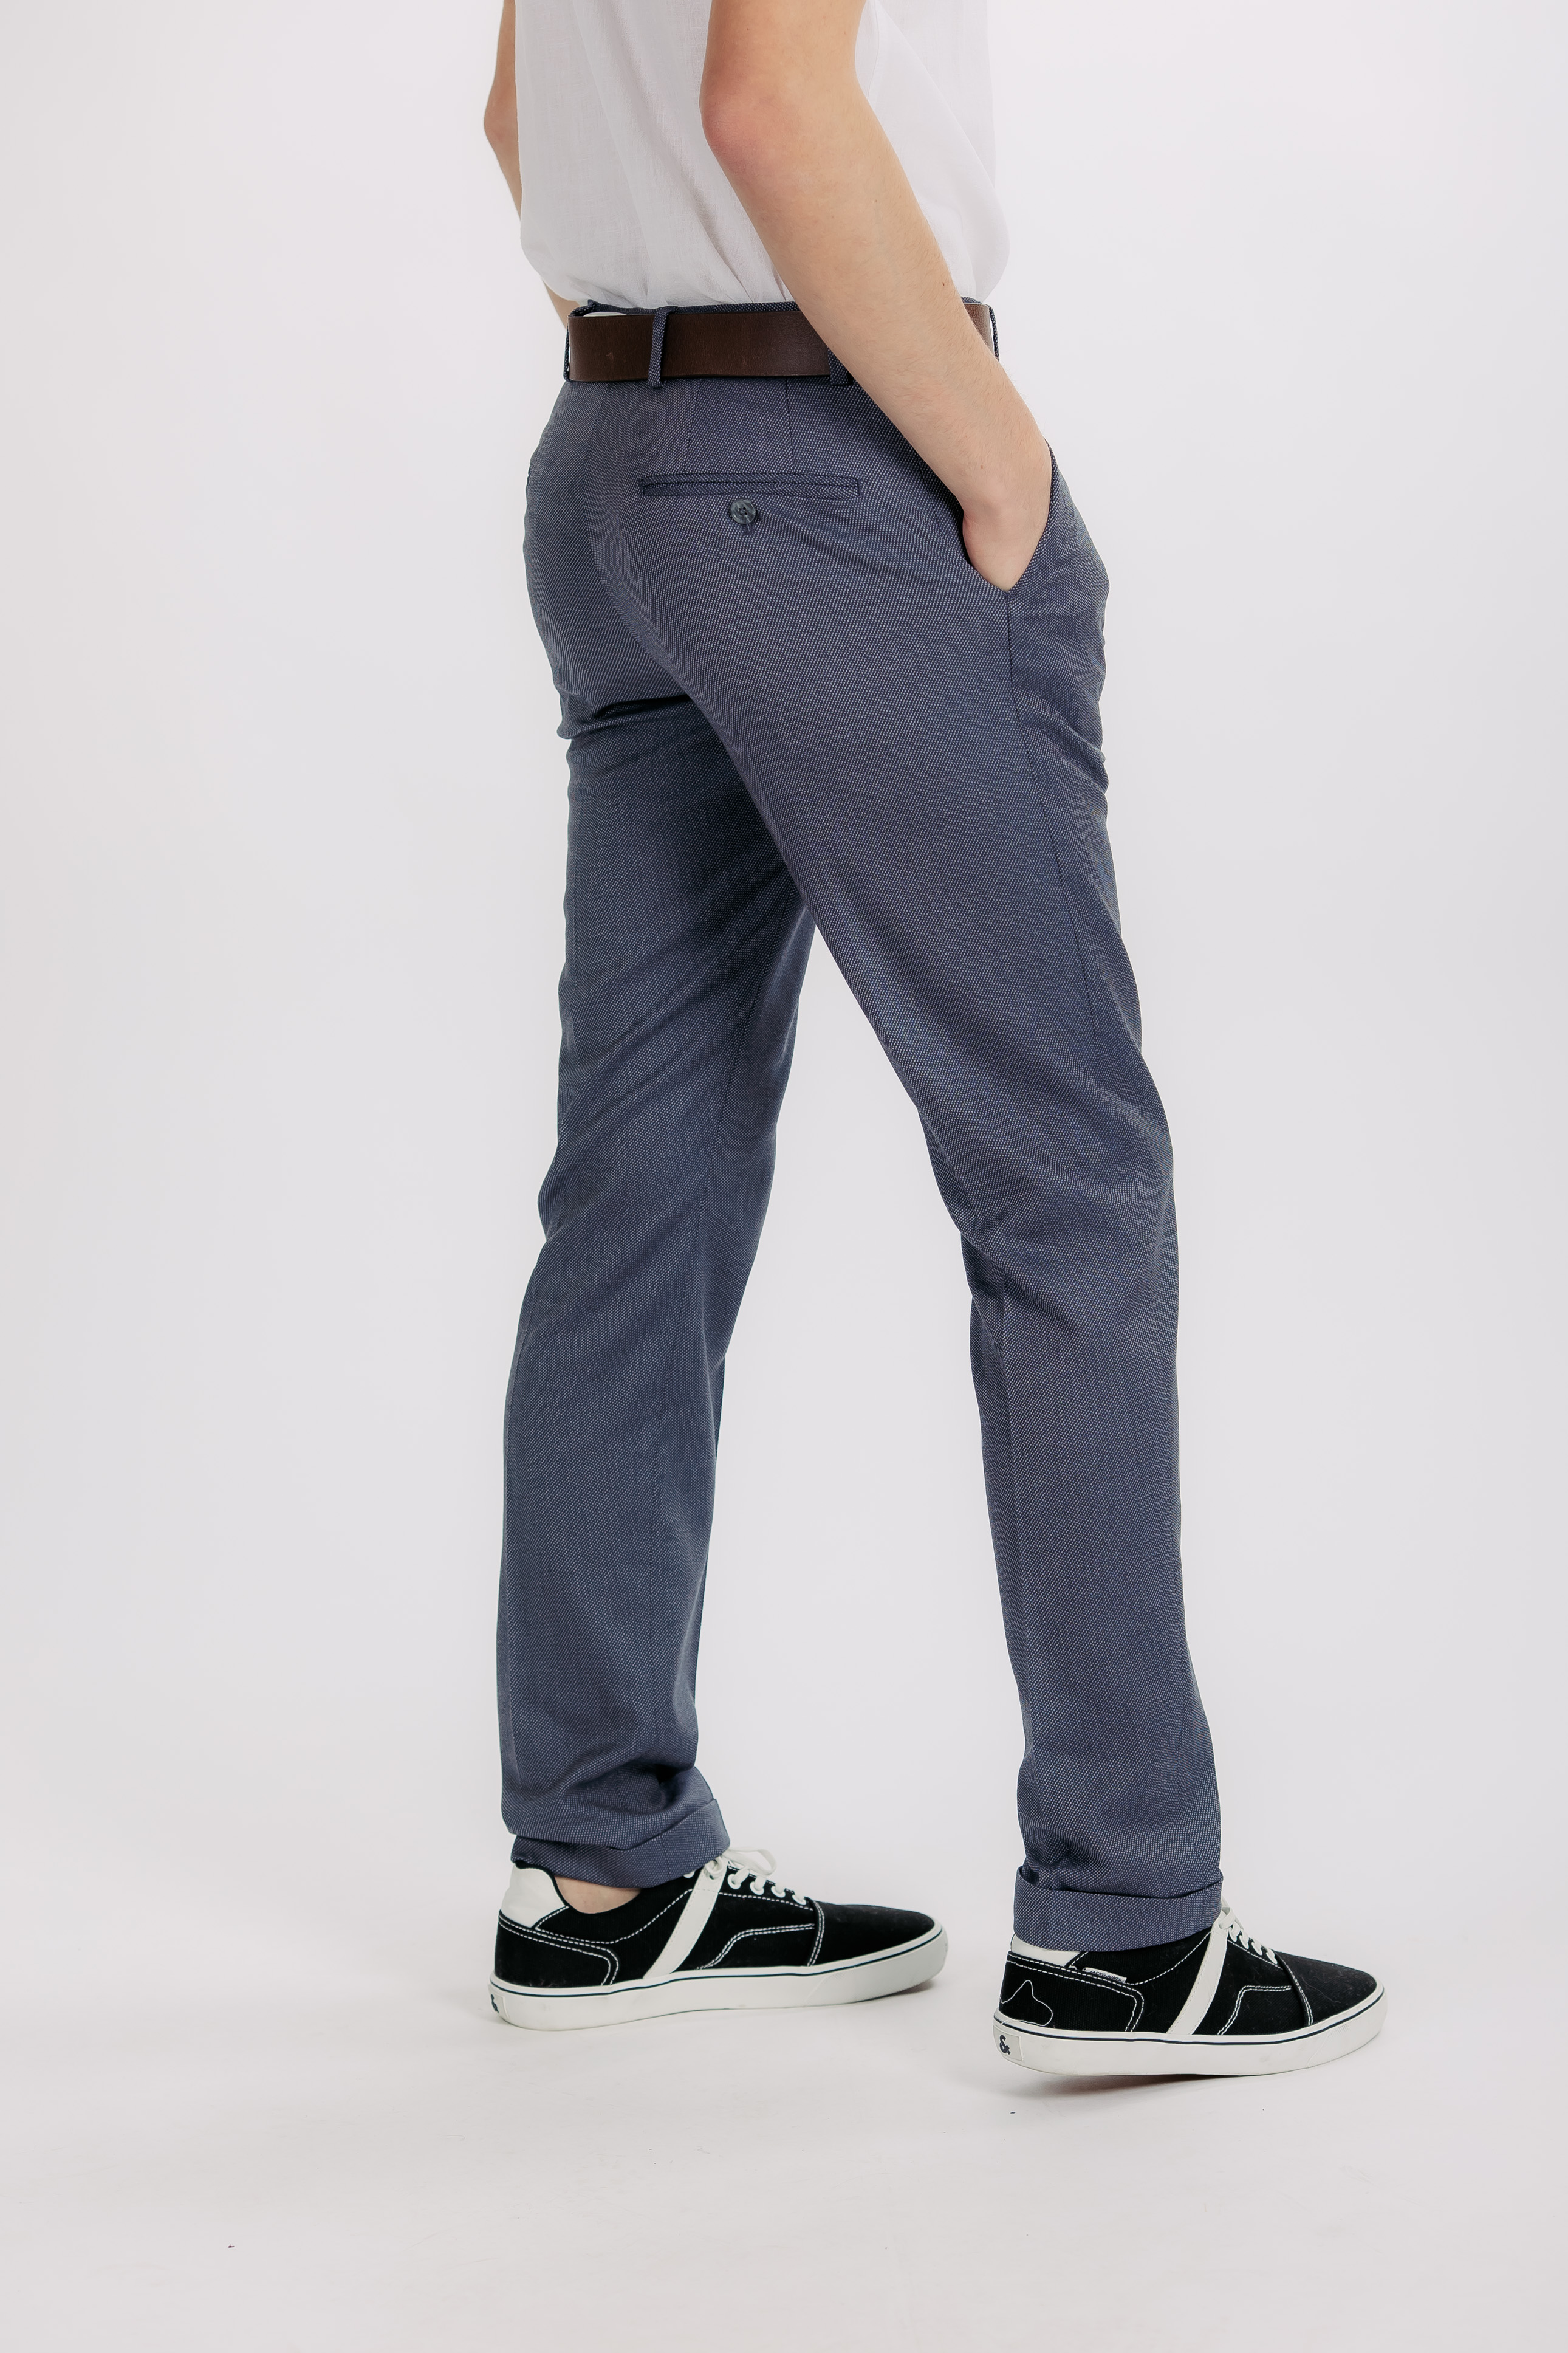 Pantaloni Selected Casual (11899) photo 1